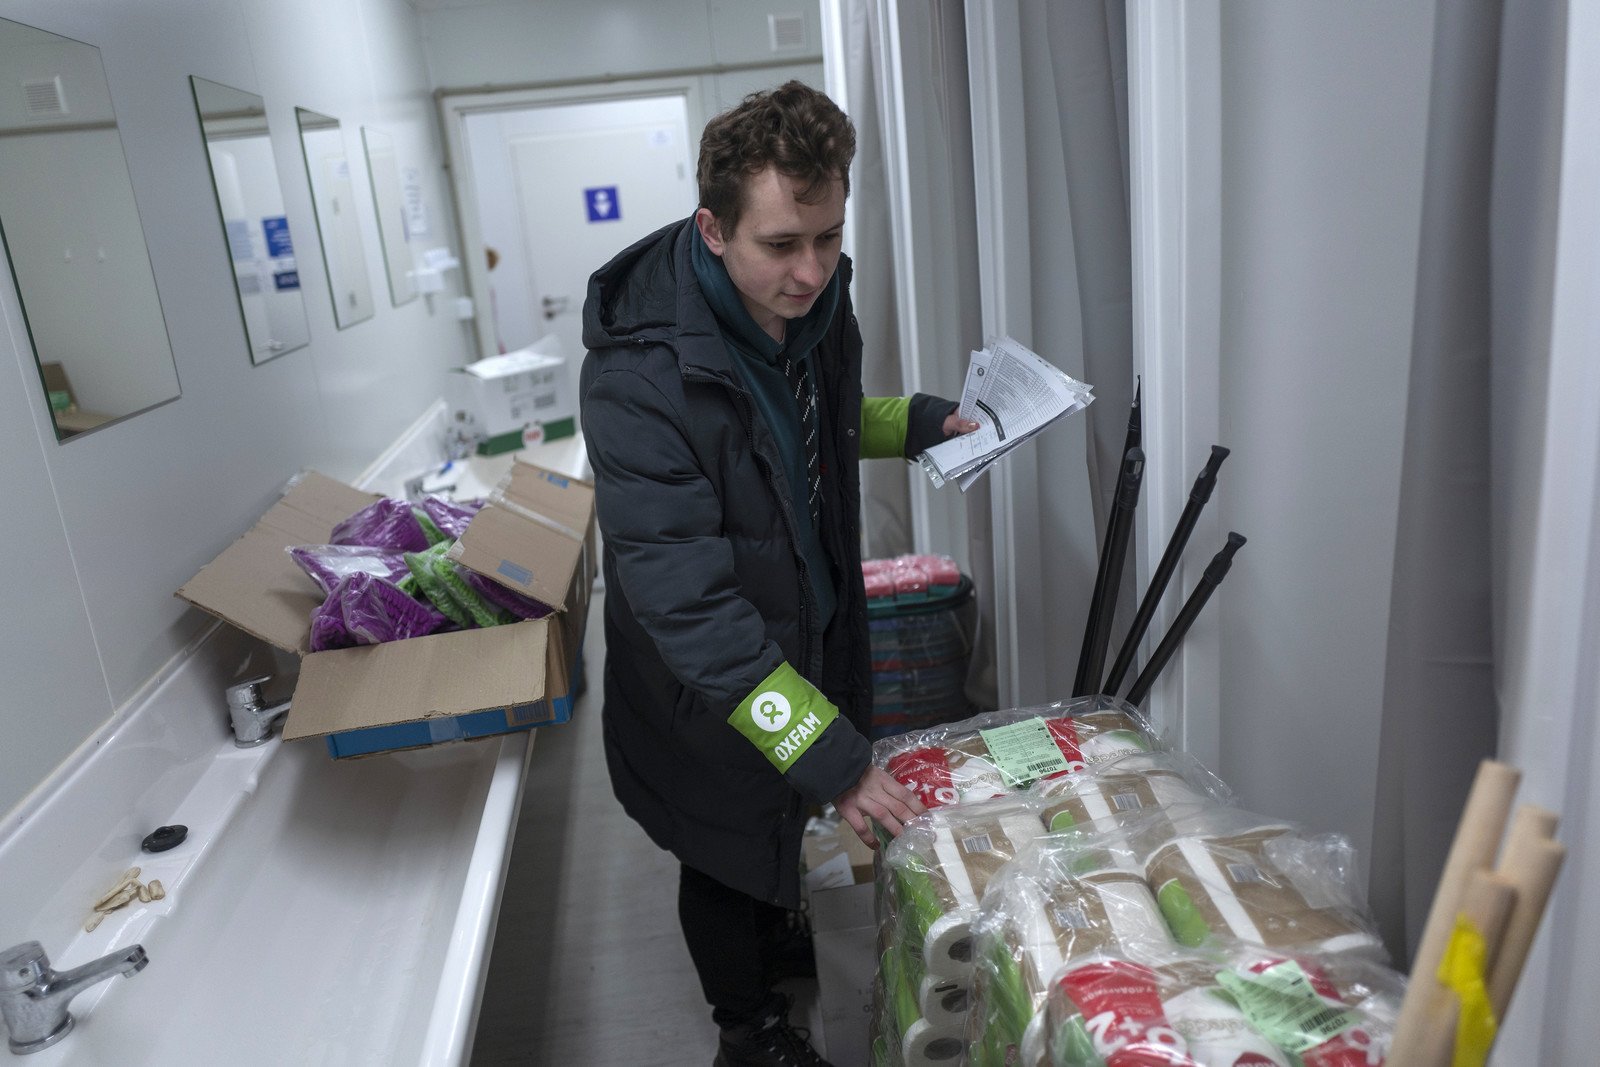 Oxfam staff arranges hygiene items for displaced people in Novoselivka